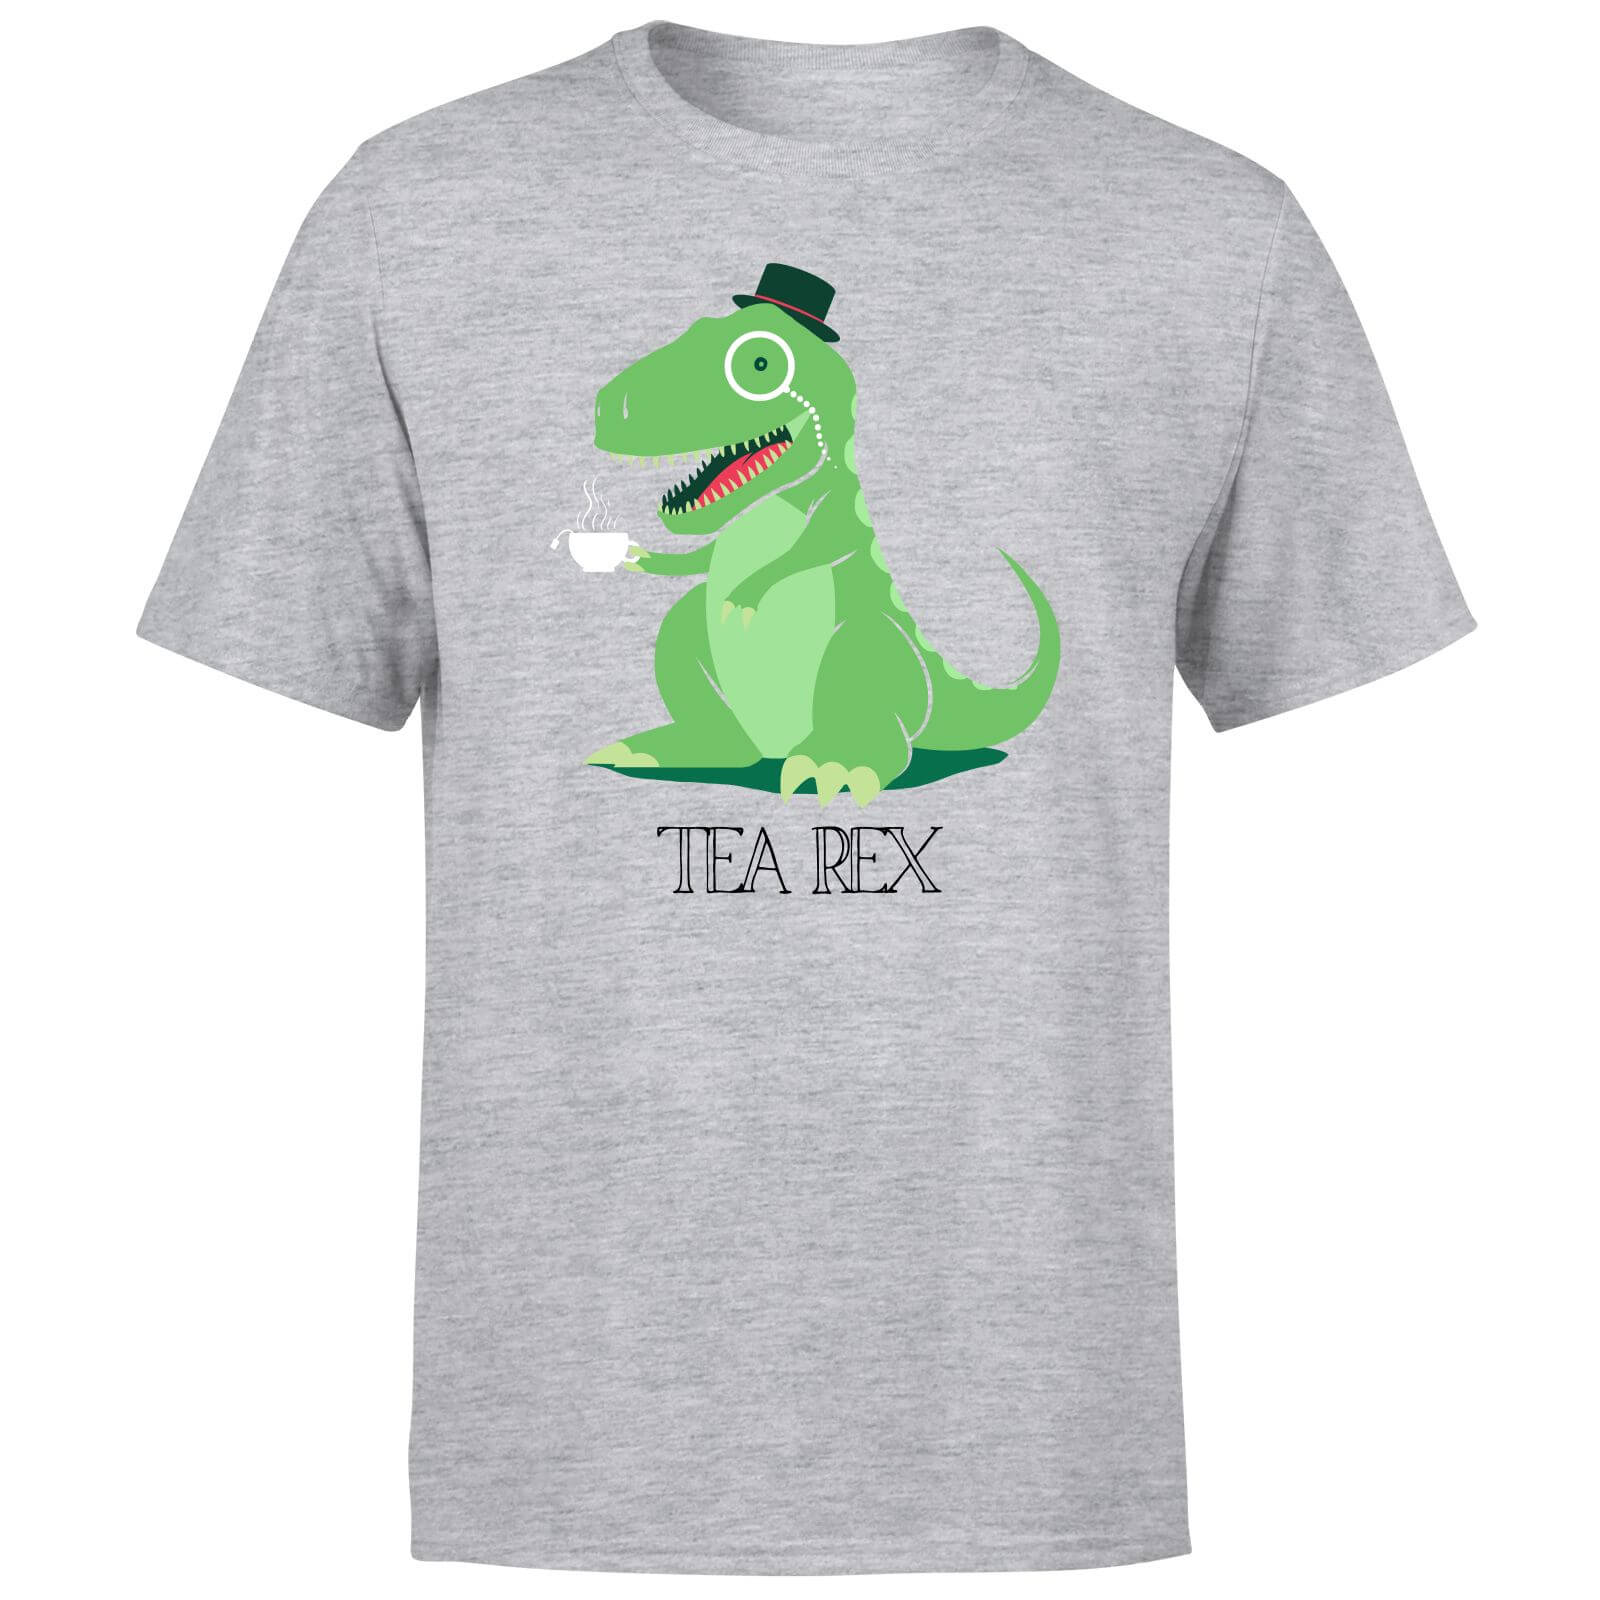 Tea Rex Men's T-Shirt - Grey - 5Xl